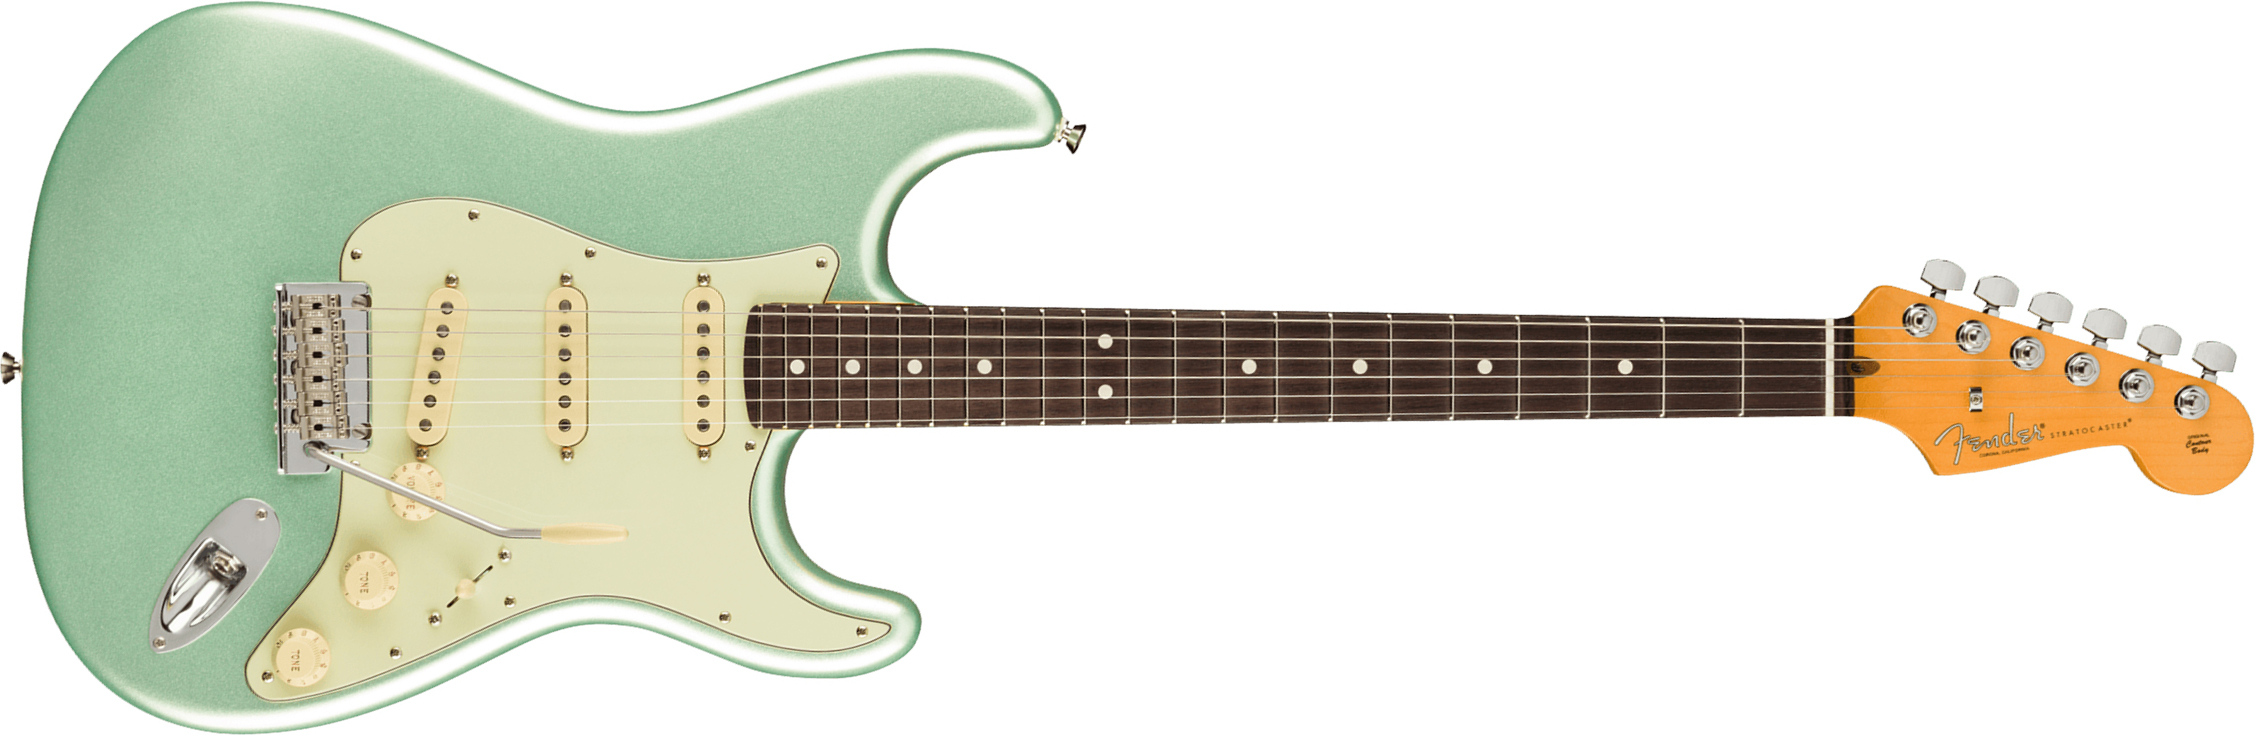 Fender Strat American Professional Ii Usa Rw - Mystic Surf Green - Str shape electric guitar - Main picture